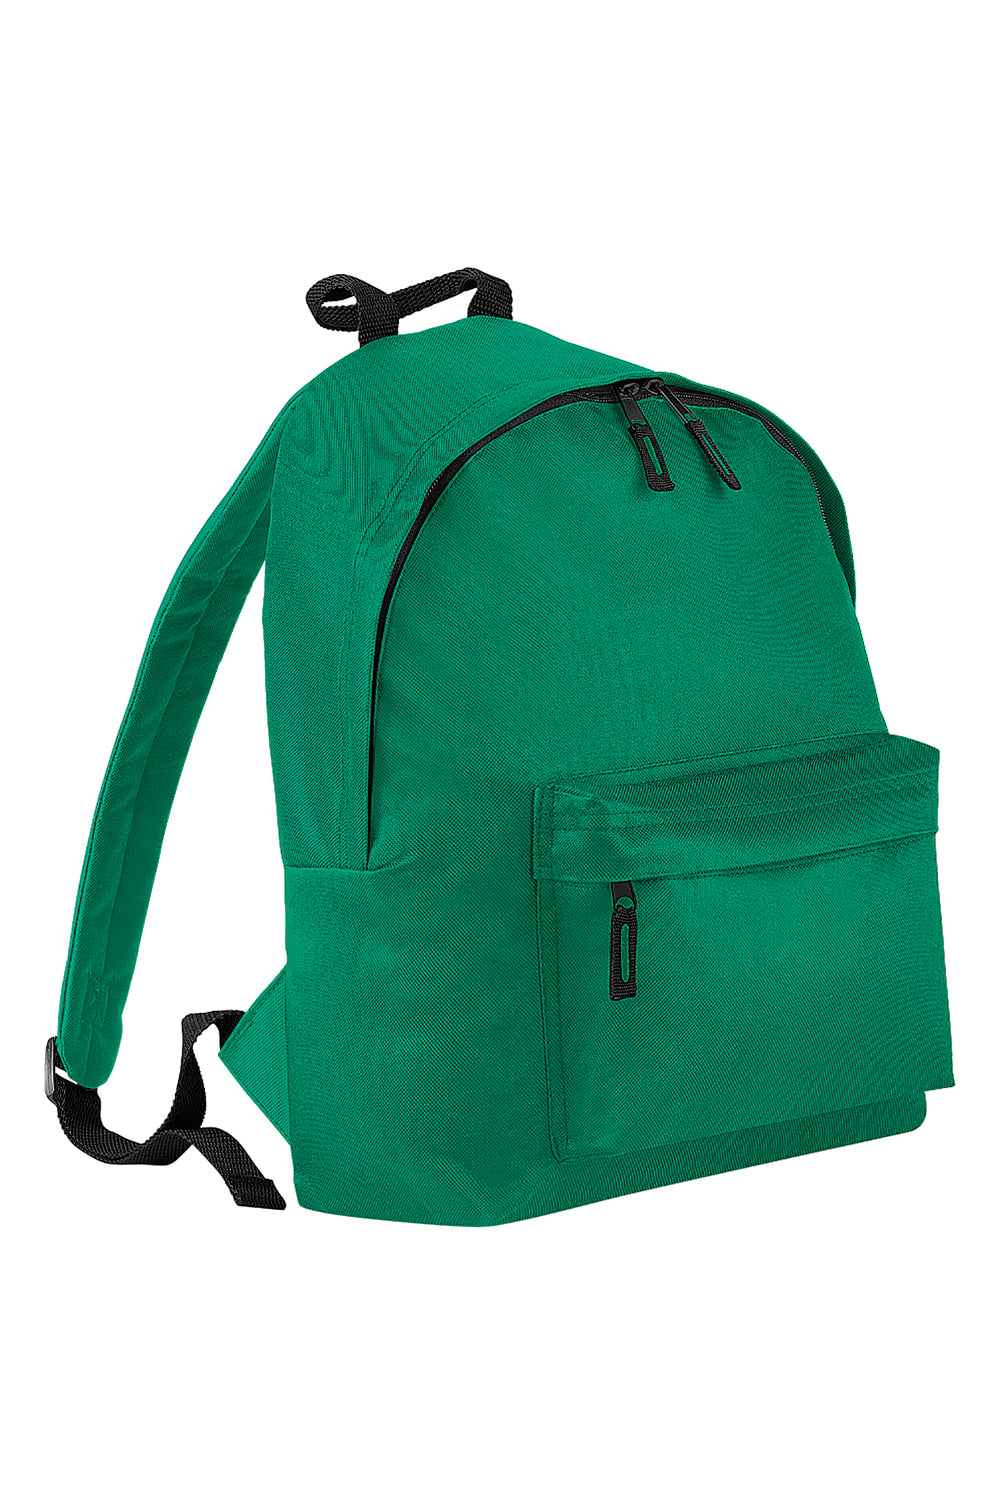 Fashion Backpack / Rucksack (18 Liters) - Kelly Green